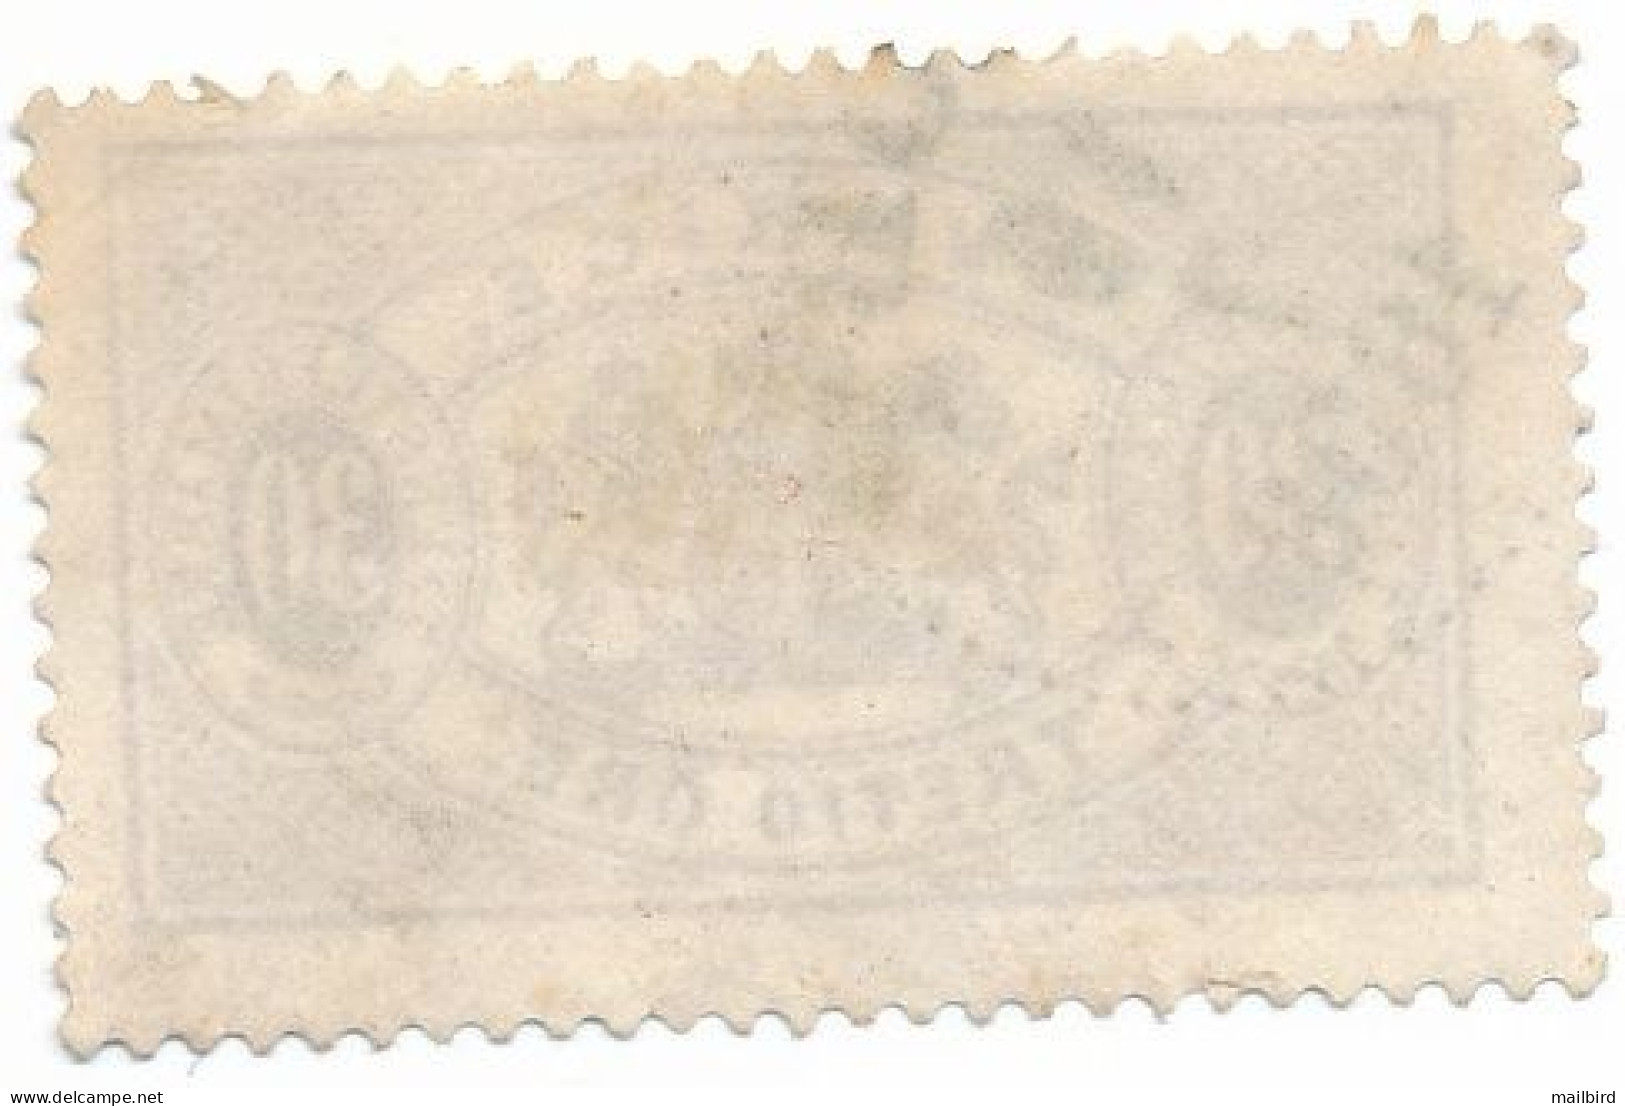 SWEDEN SVERIGE ?? OFFICIAL STAMPS ORE 30 USED - Revenue Stamps